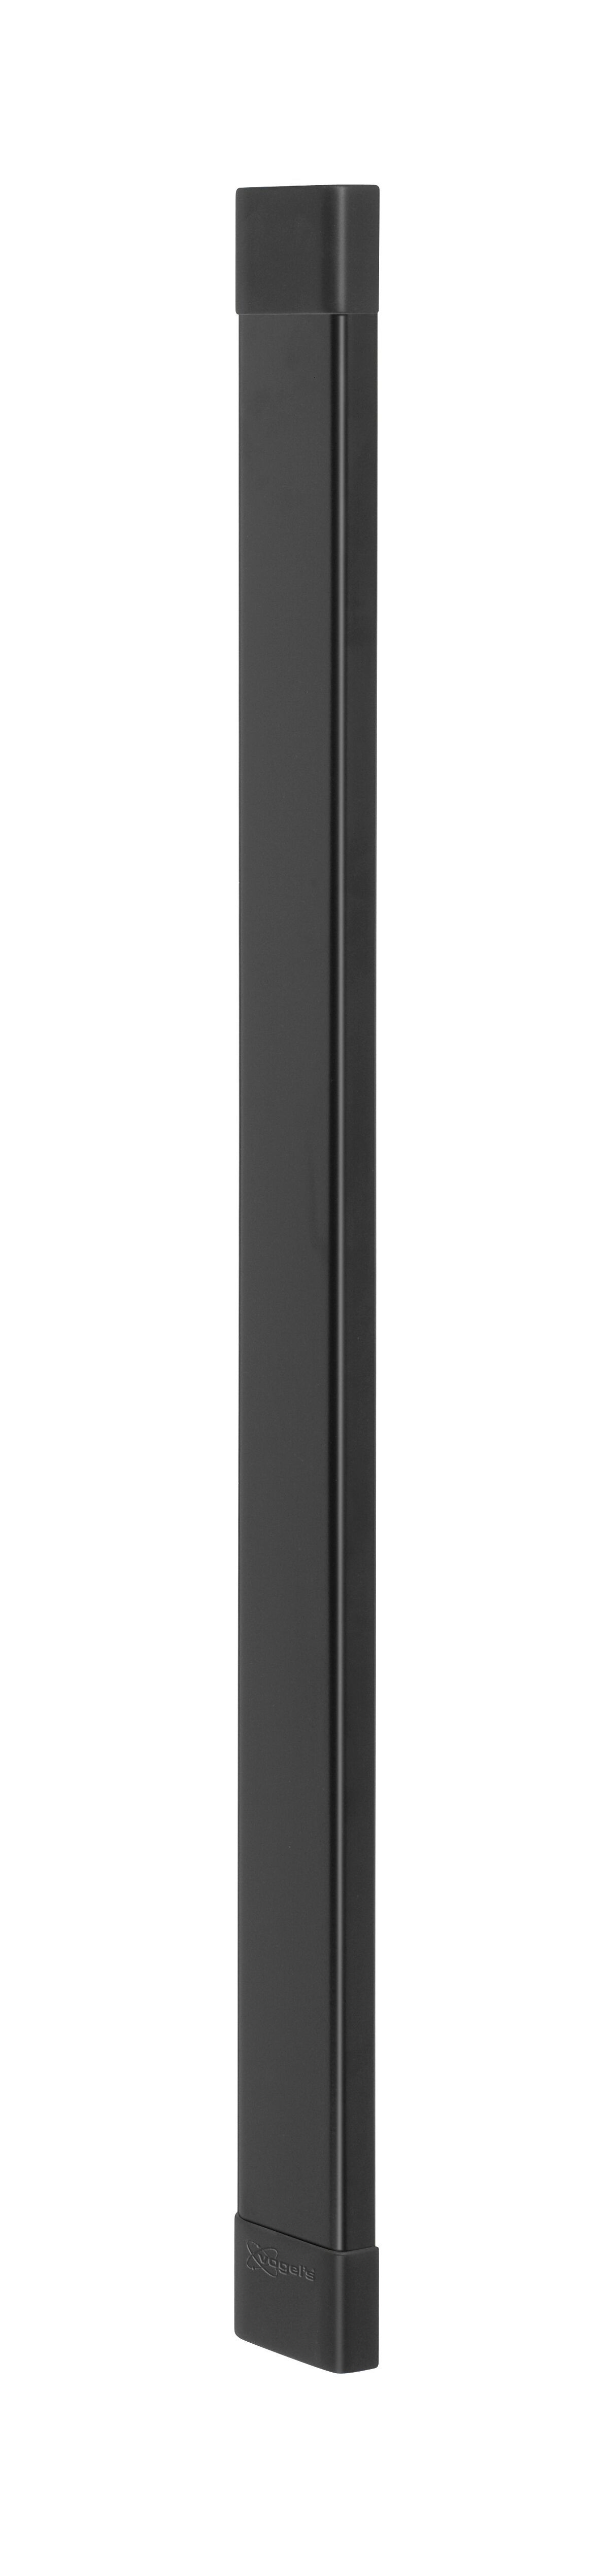 Vogel's CABLE 8 kabelgoot (zwart) - Max. aantal kabels in kabelgoot: Tot 8 kabels - Lengte: Product